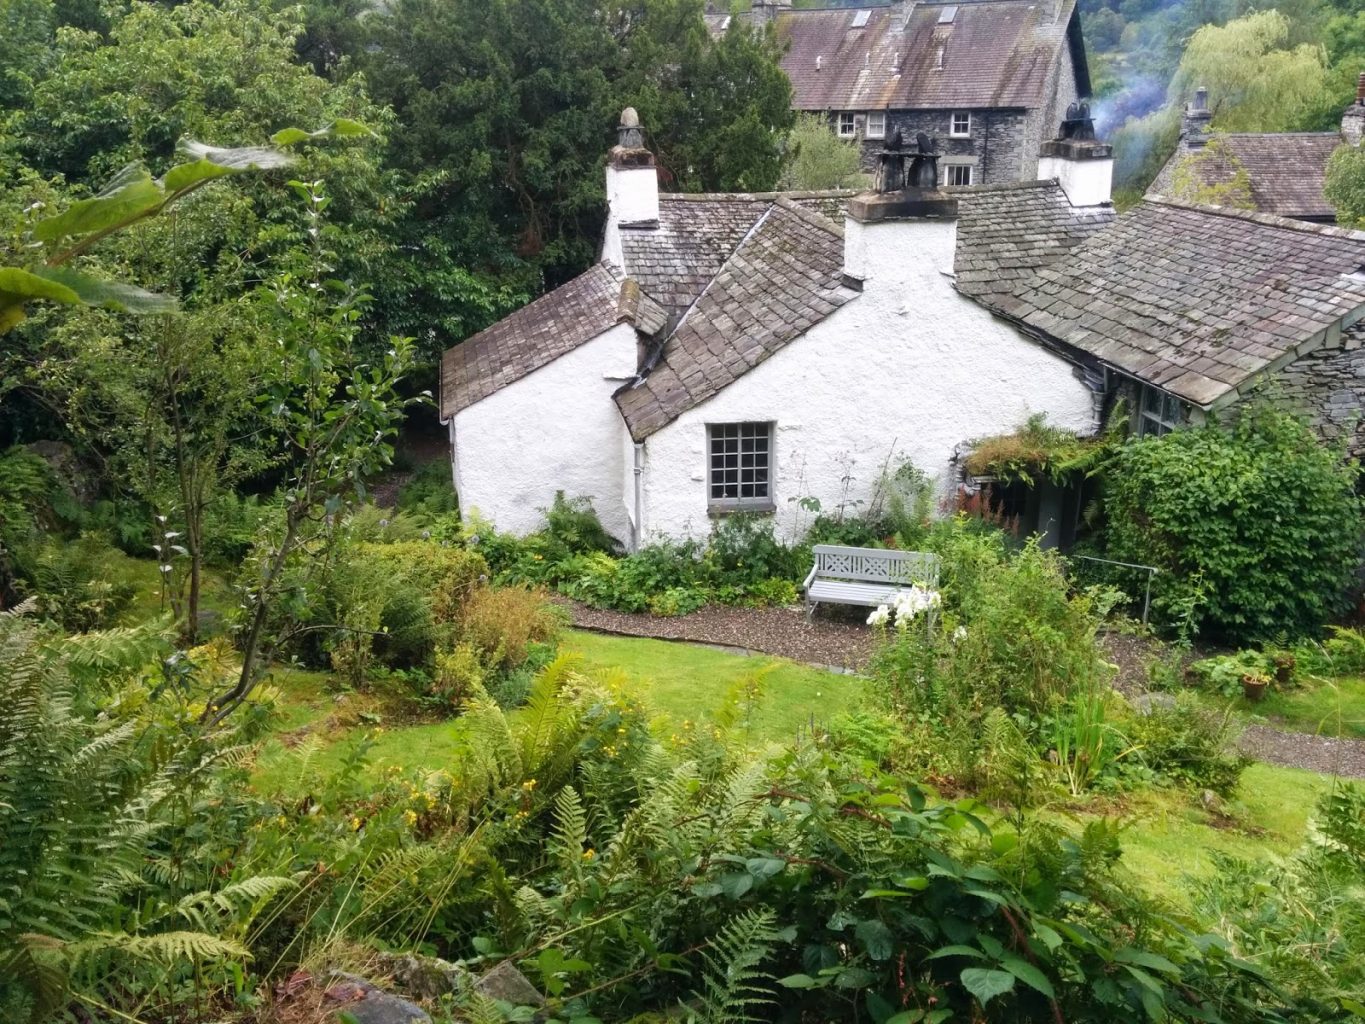 Dove Cottage, Wordsworth's home